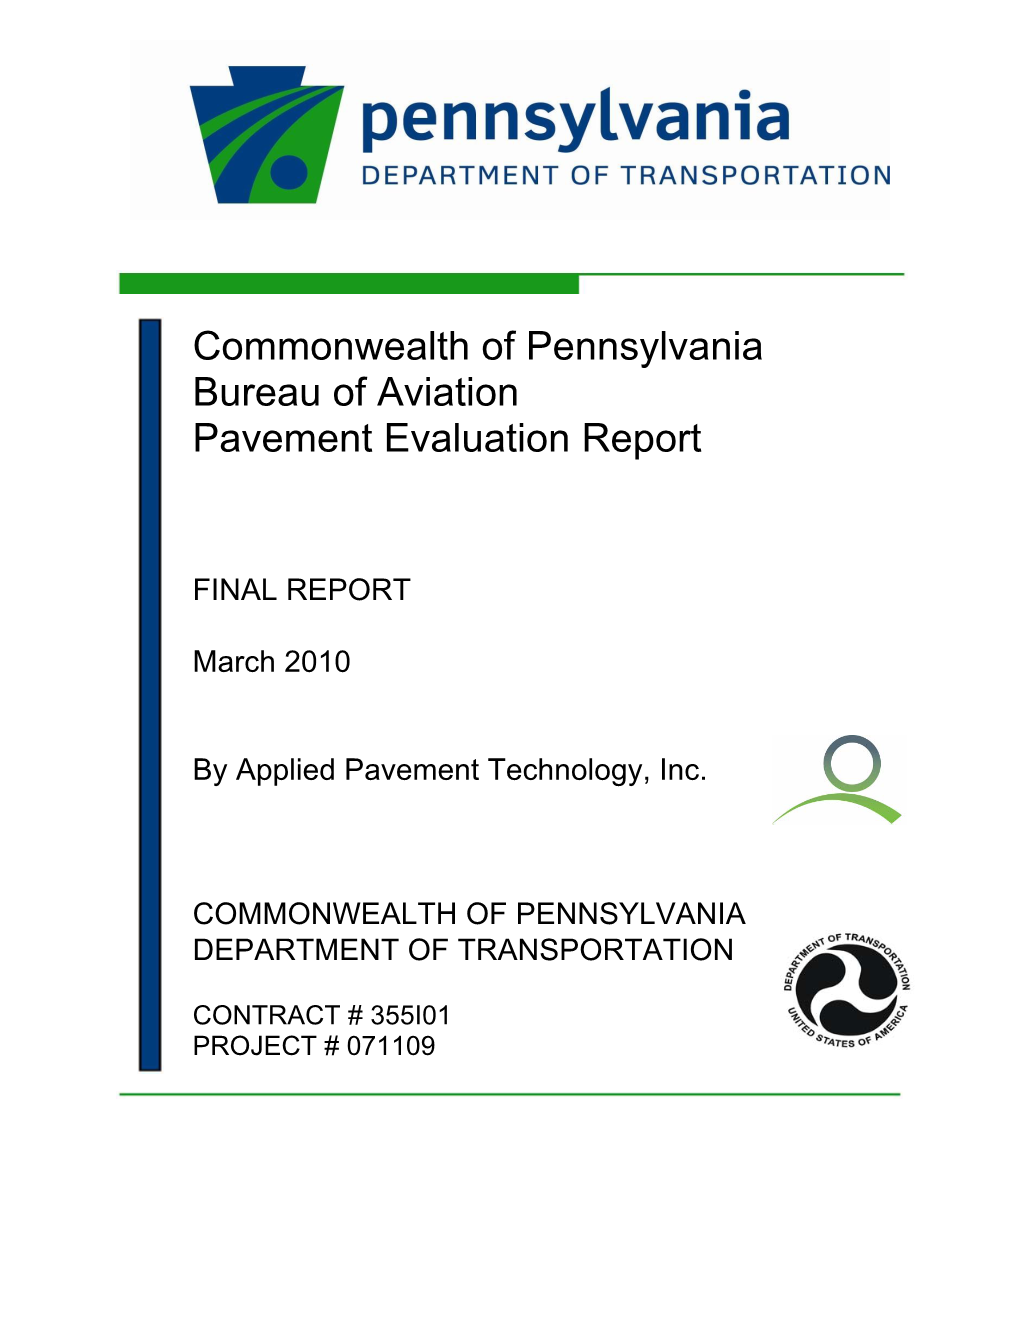 Commonwealth of Pennsylvania Bureau of Aviation Pavement Evaluation Report